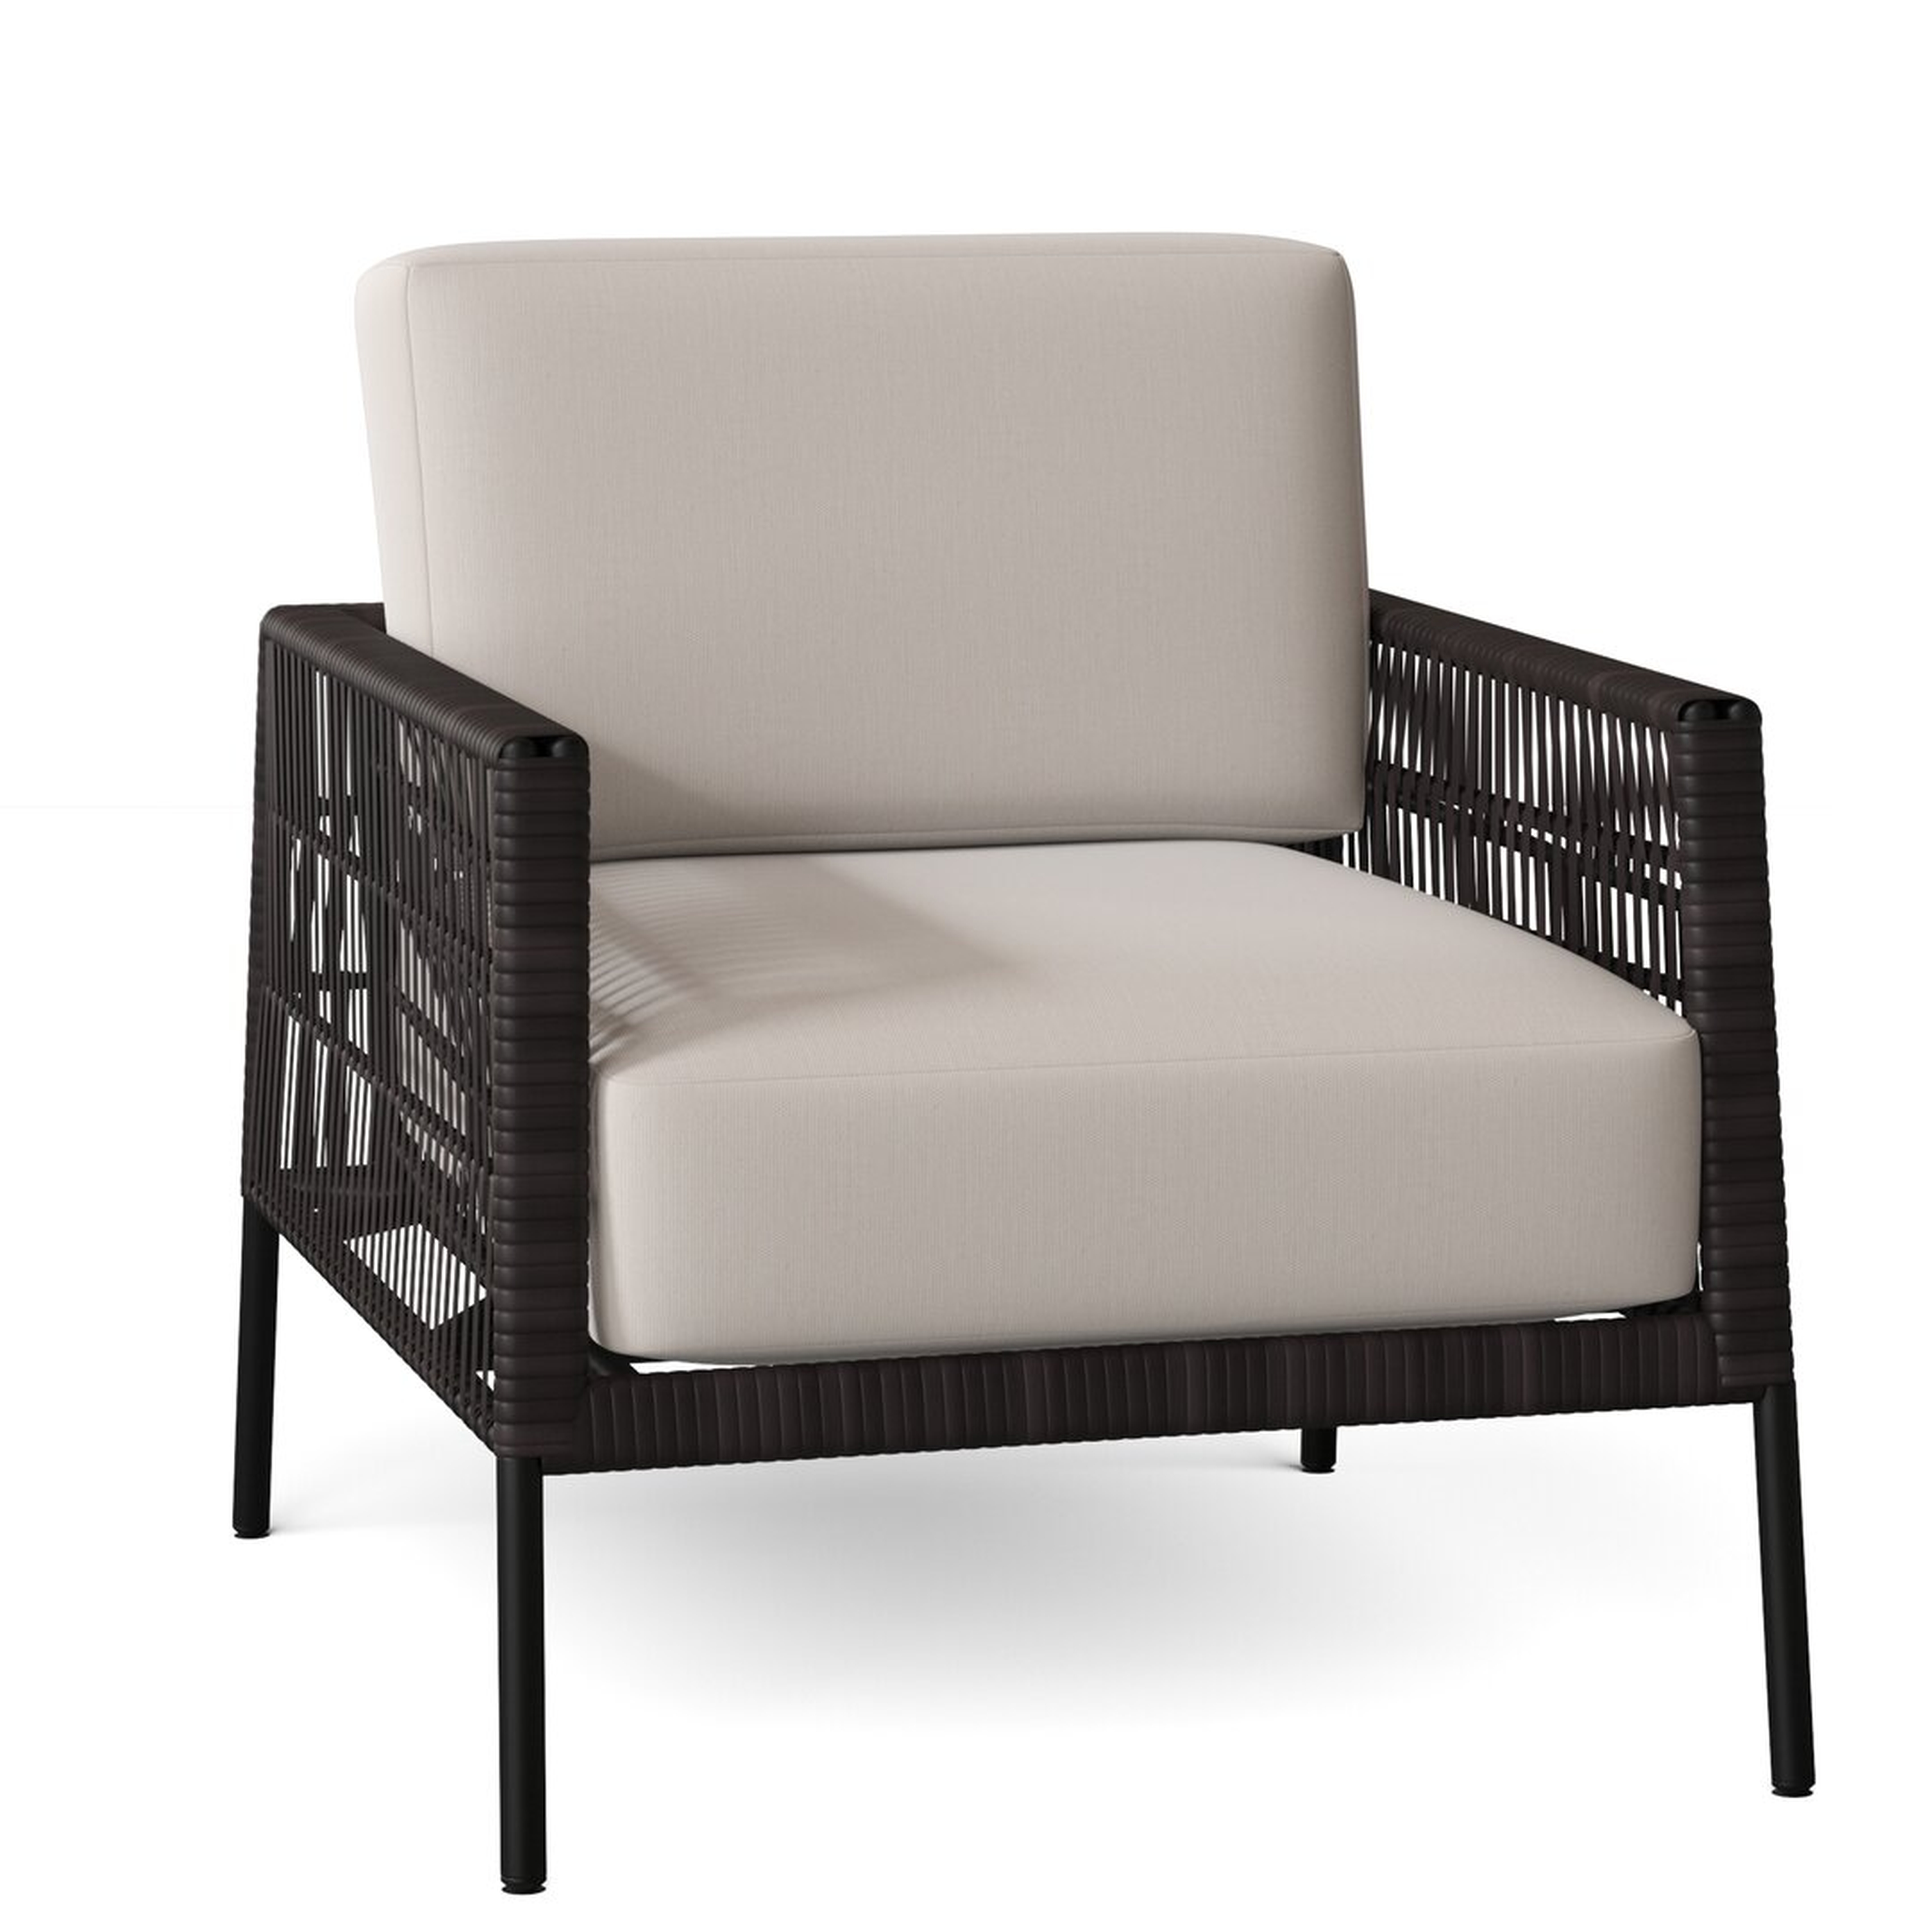 "Woodard Maiz Patio Chair with Cushions" - Perigold